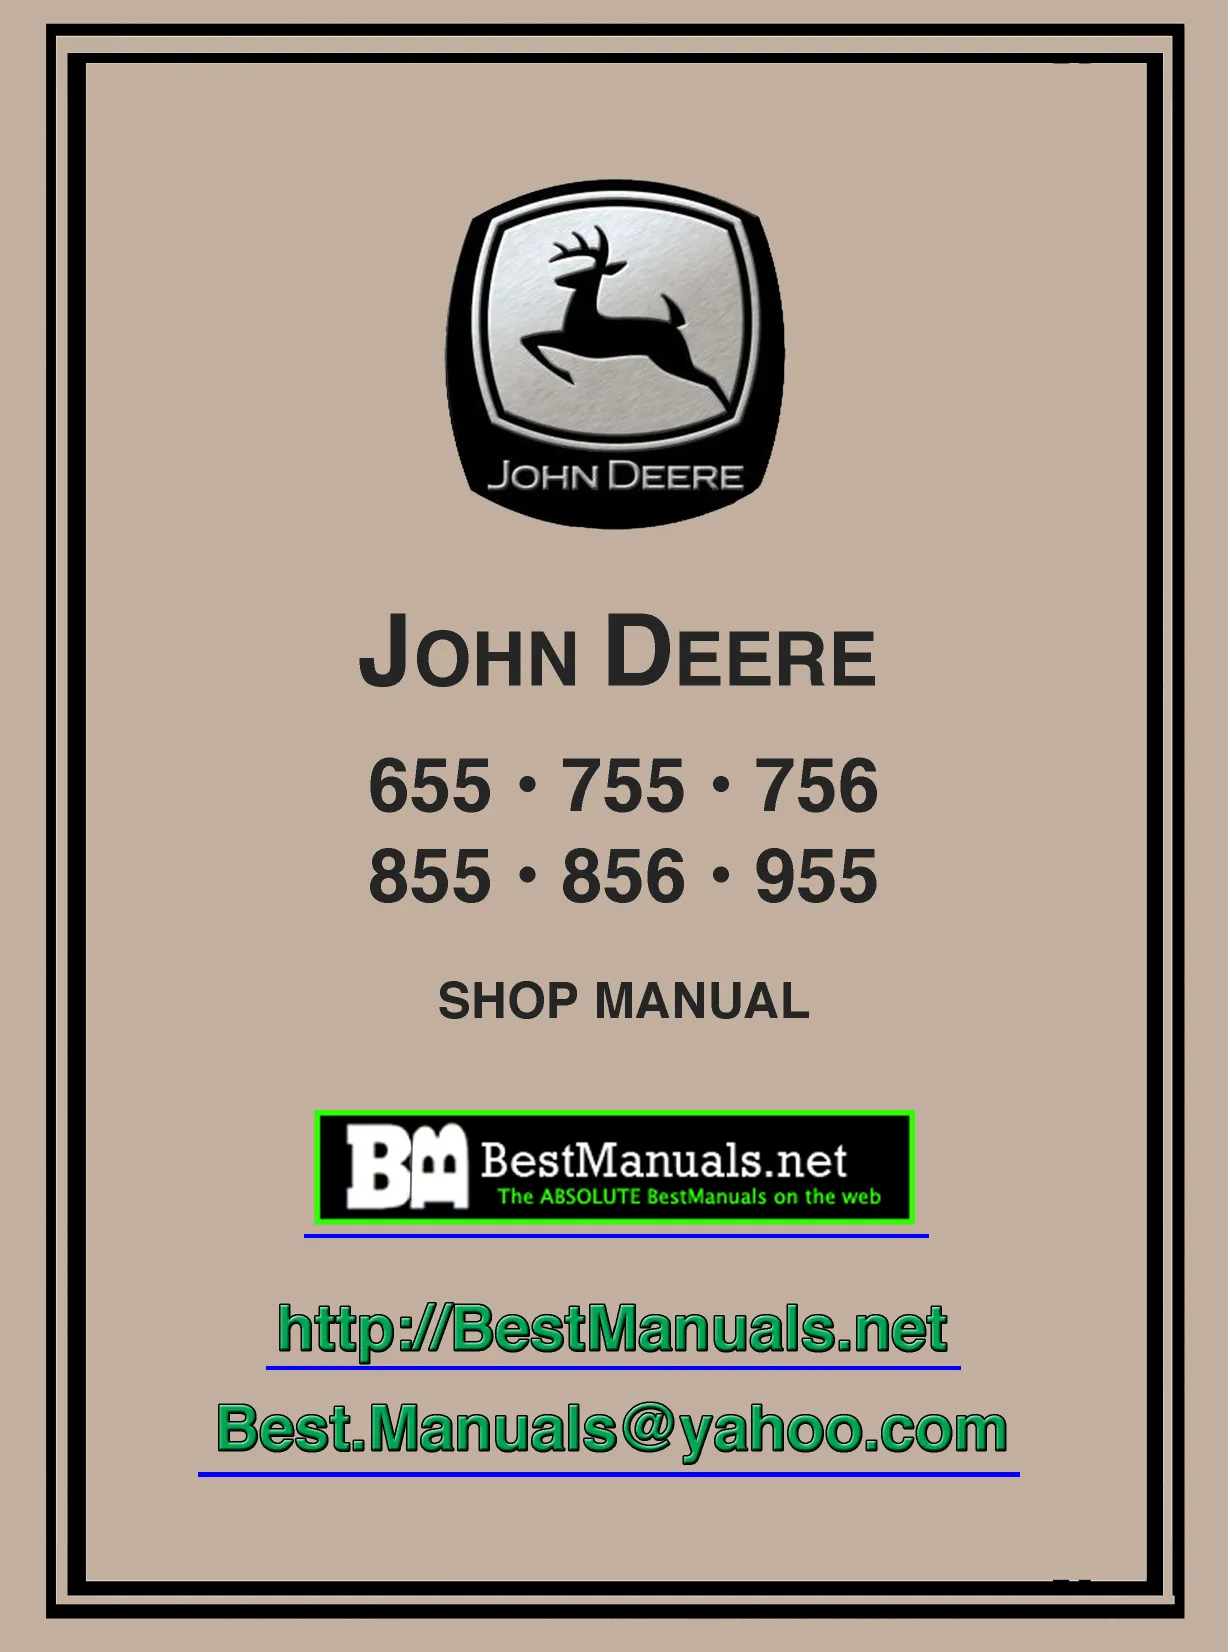 John Deere 655, 755, 855, 955, 756, 856 lawn tractor service technical manual